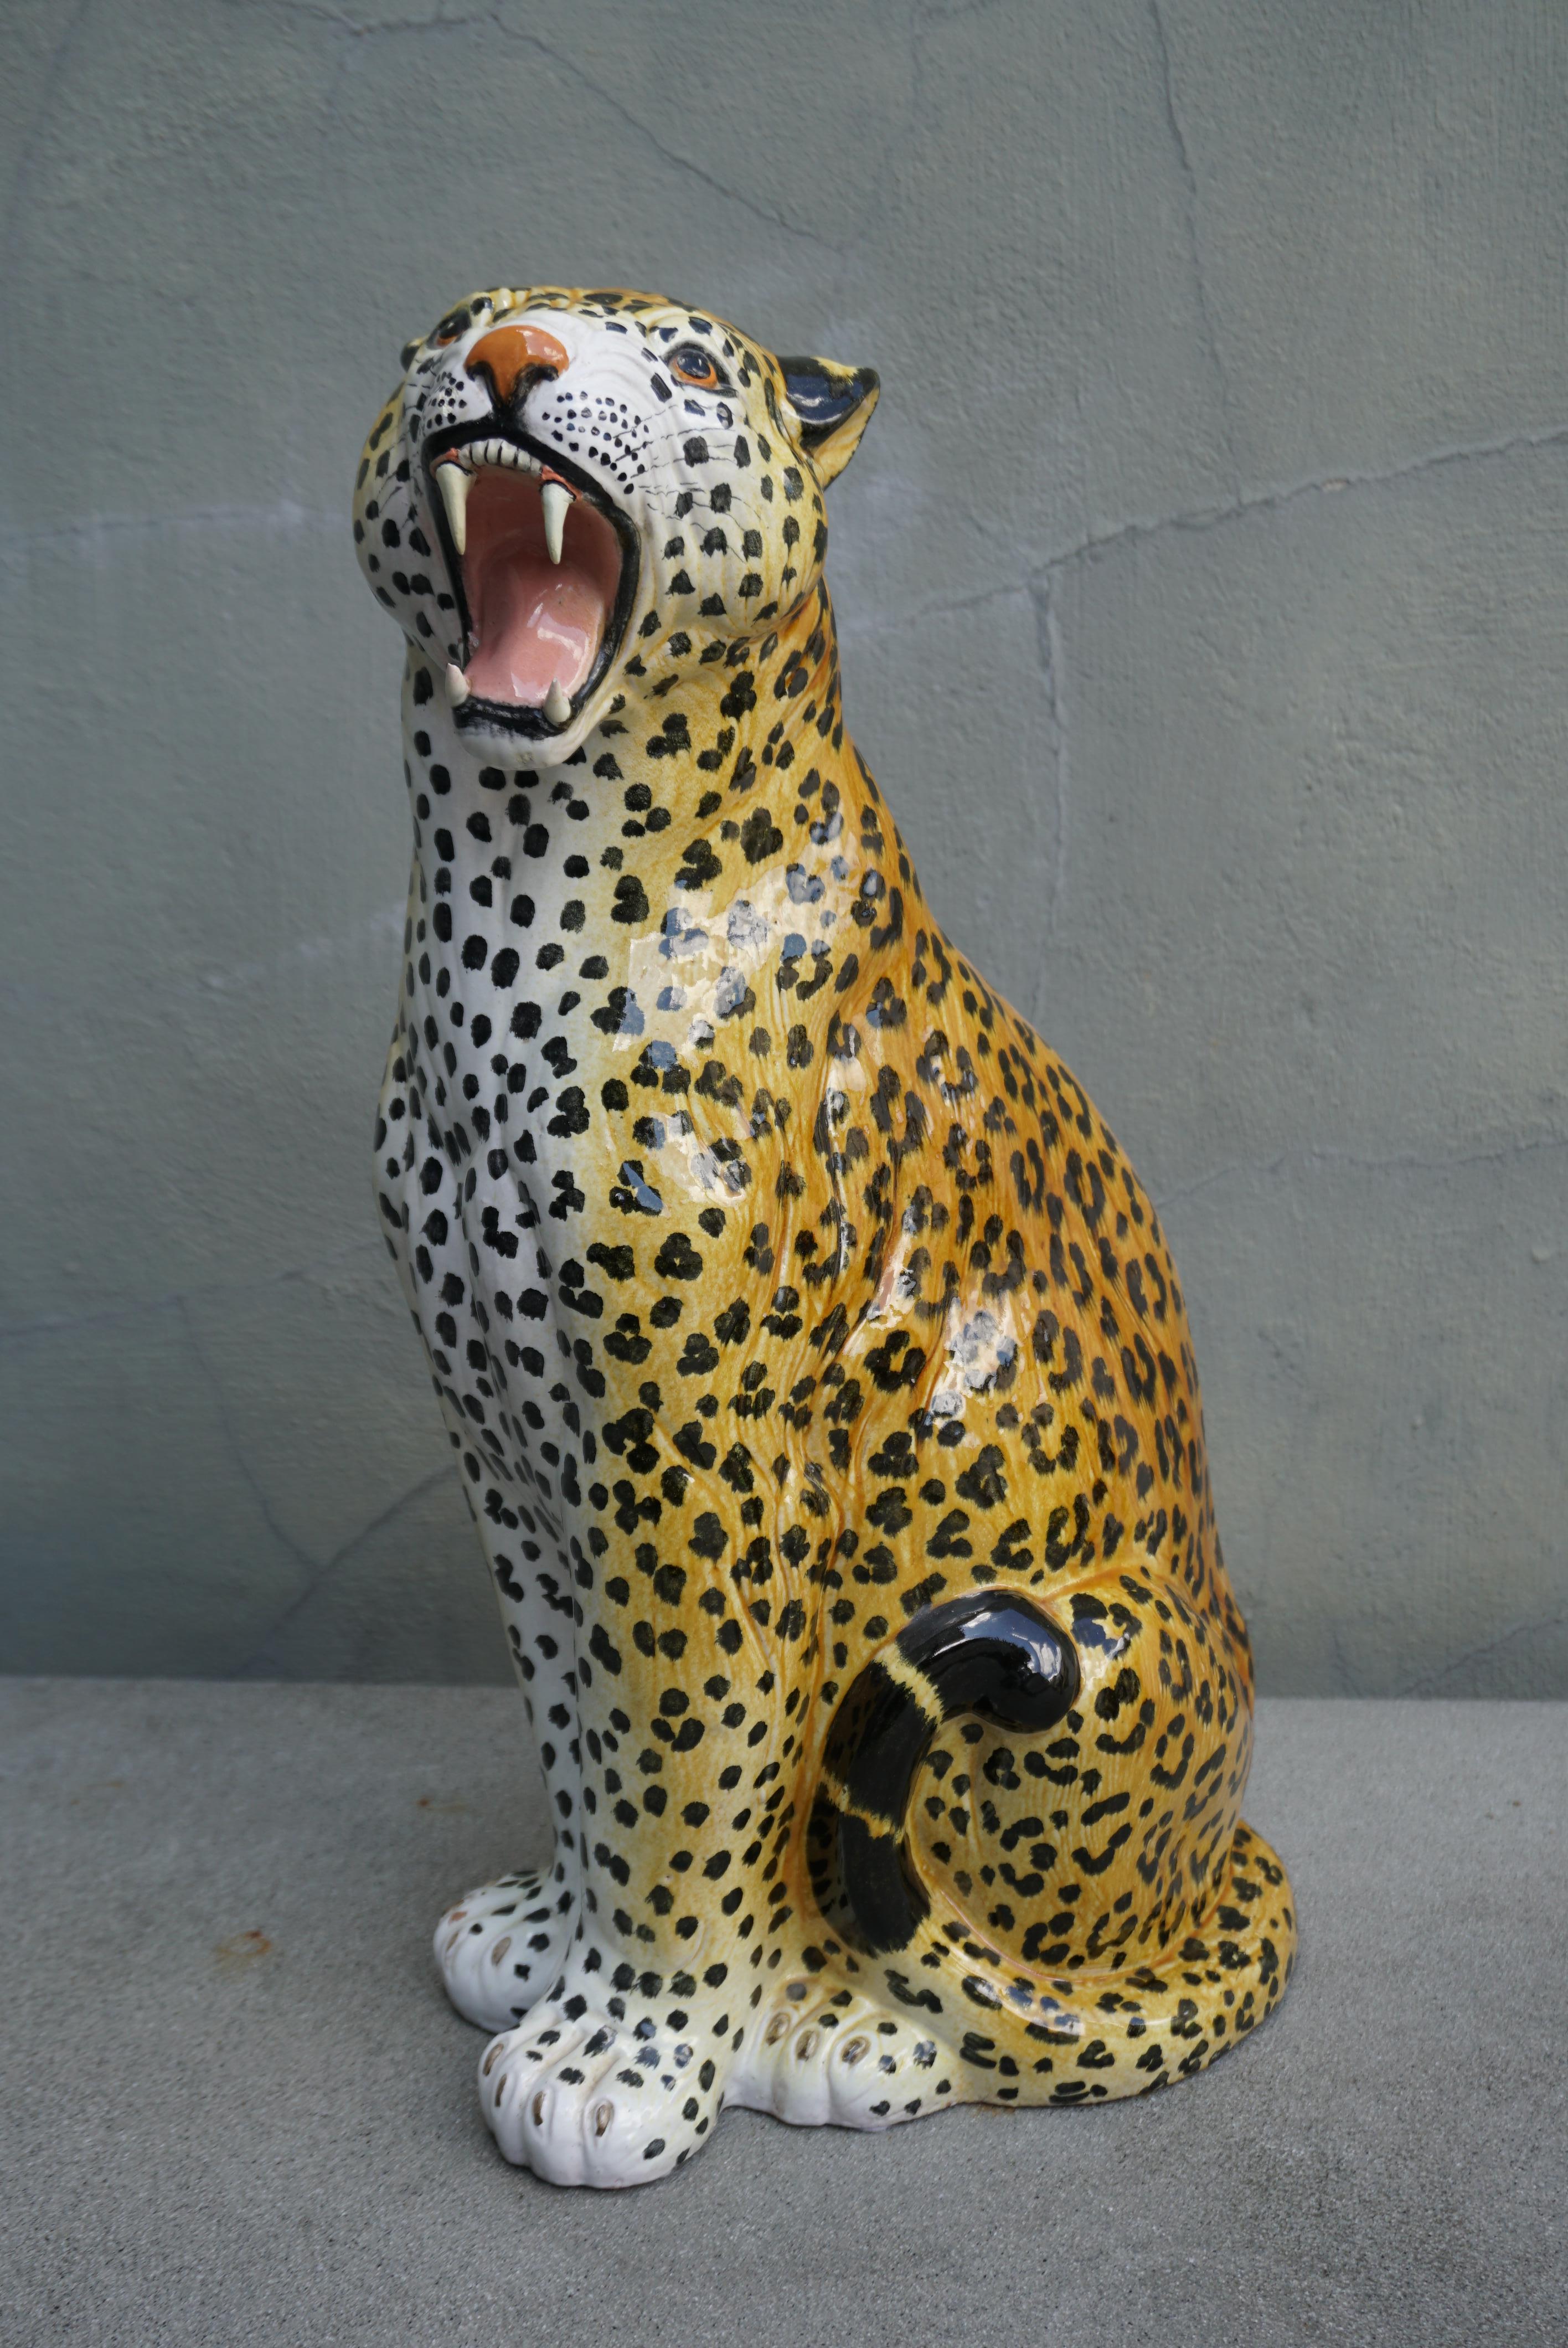 pink cheetah statue